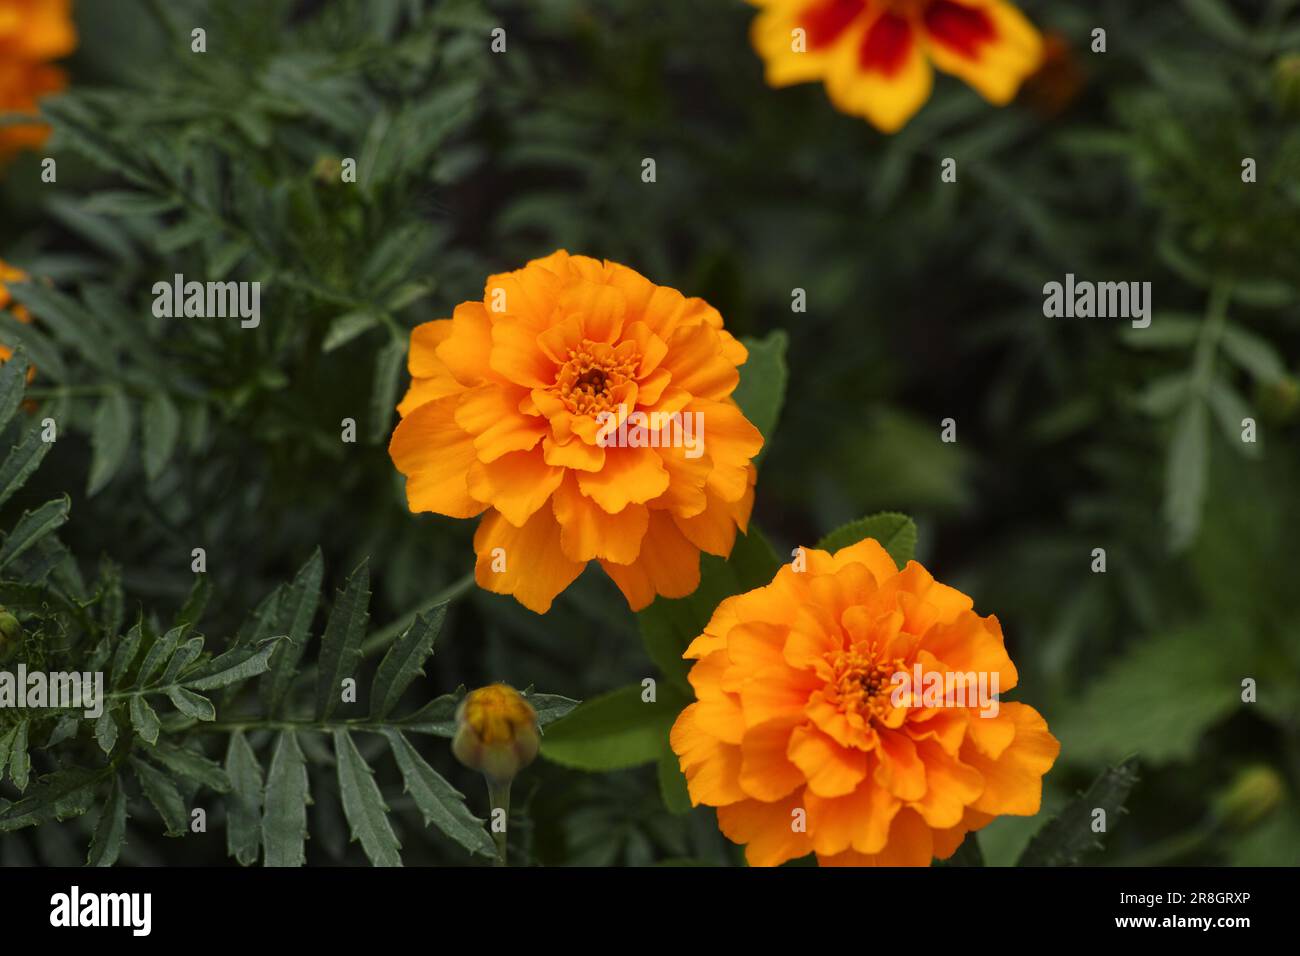 A bush with orange marigold flowers on it. Close up. Stock Photo